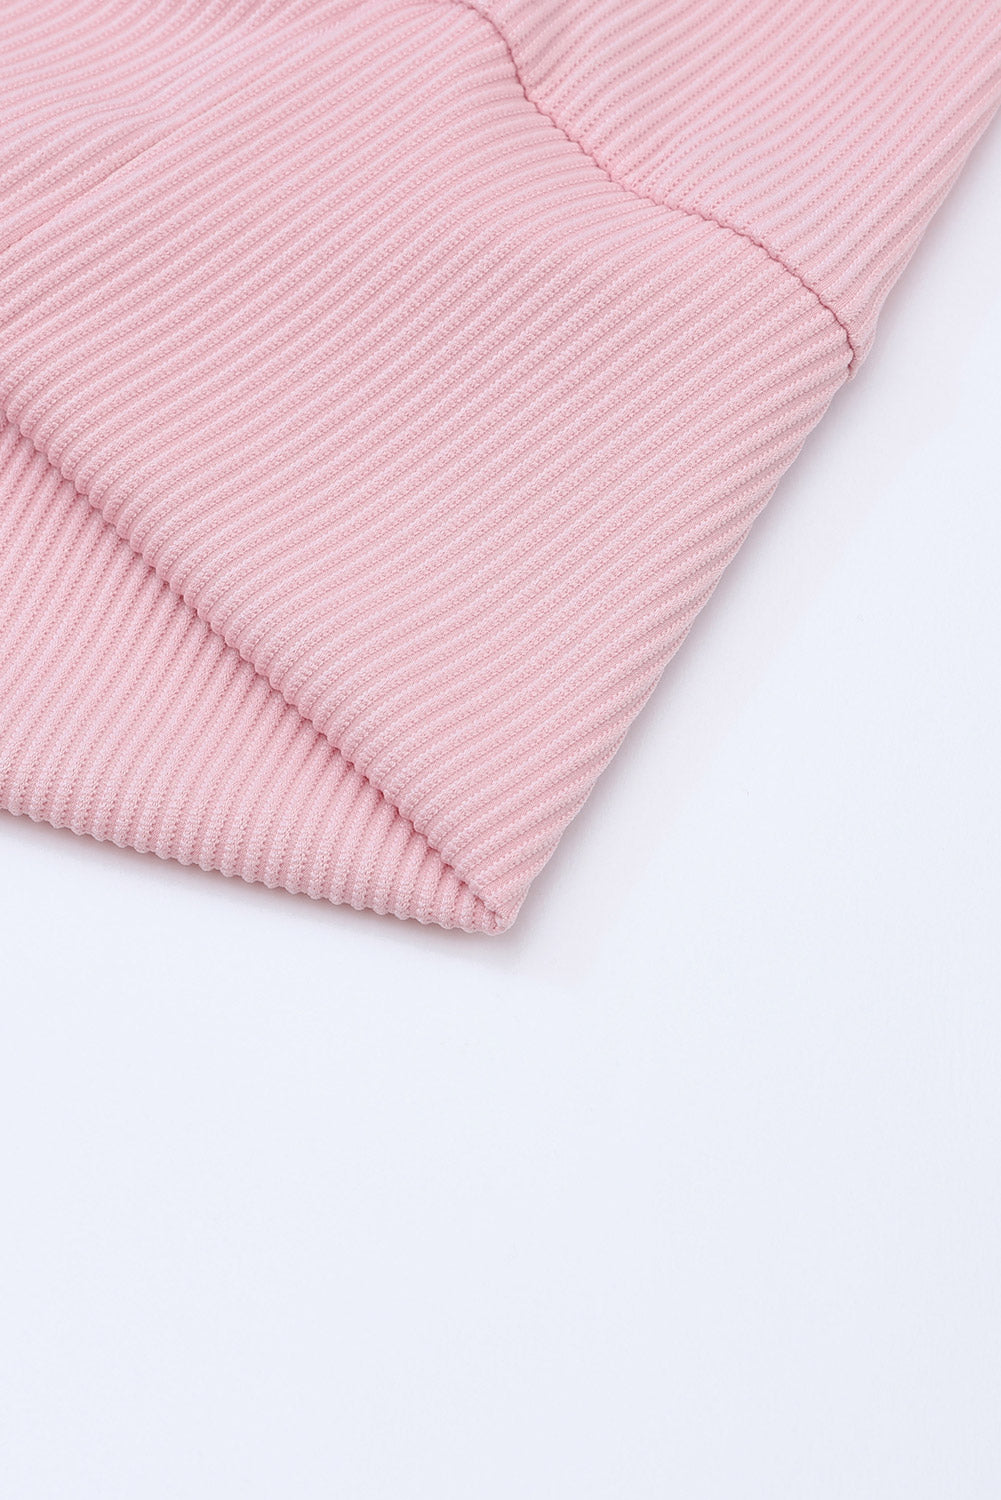 Majica dugih rukava s V izrezom od ružičaste rebraste teksture